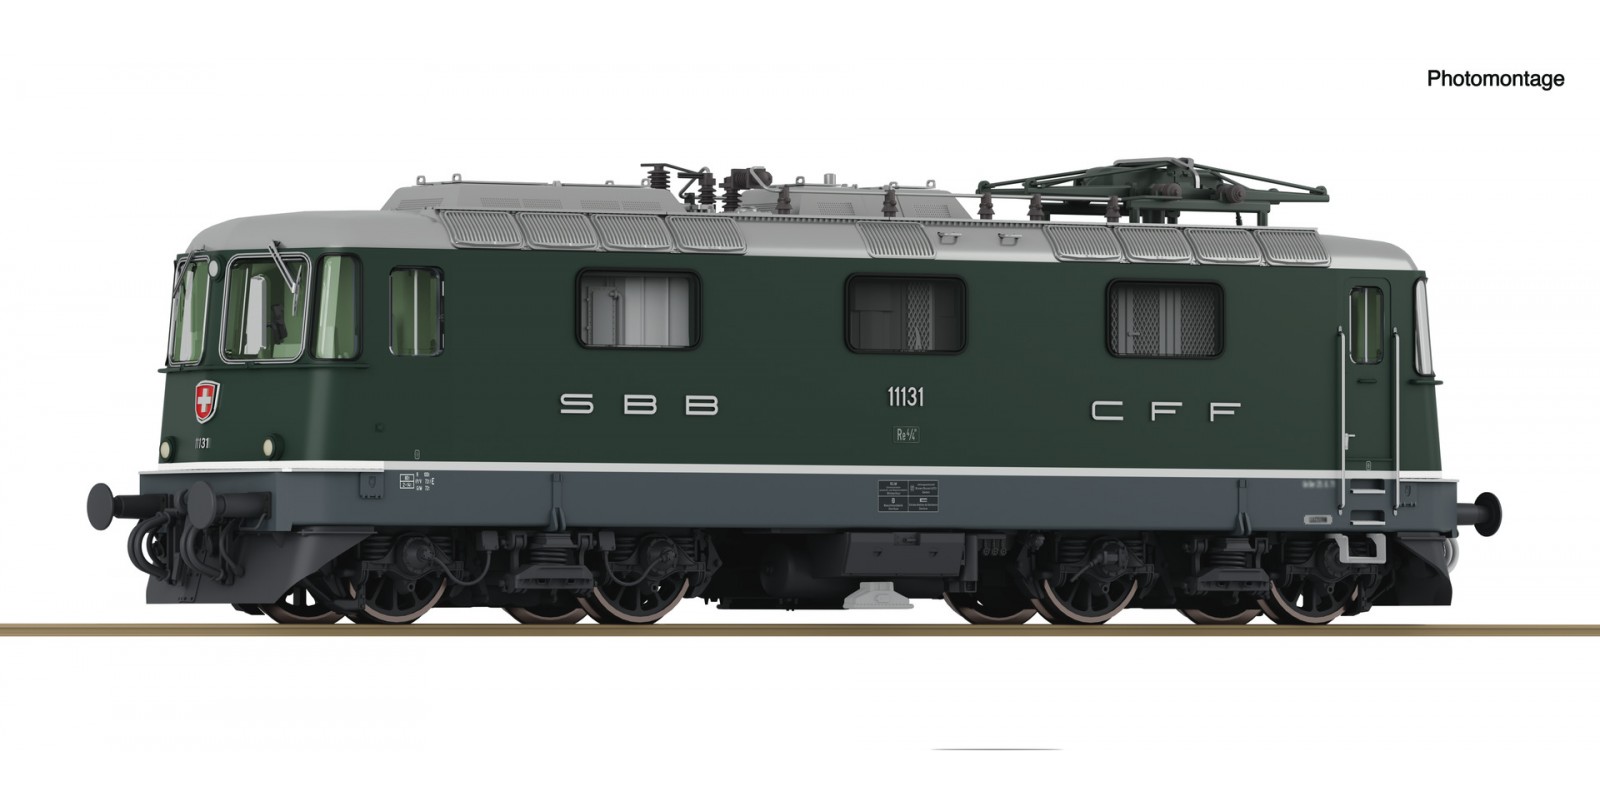 RO7520027 Electric locomotive Re 4/ 4 II 11131, SBB          